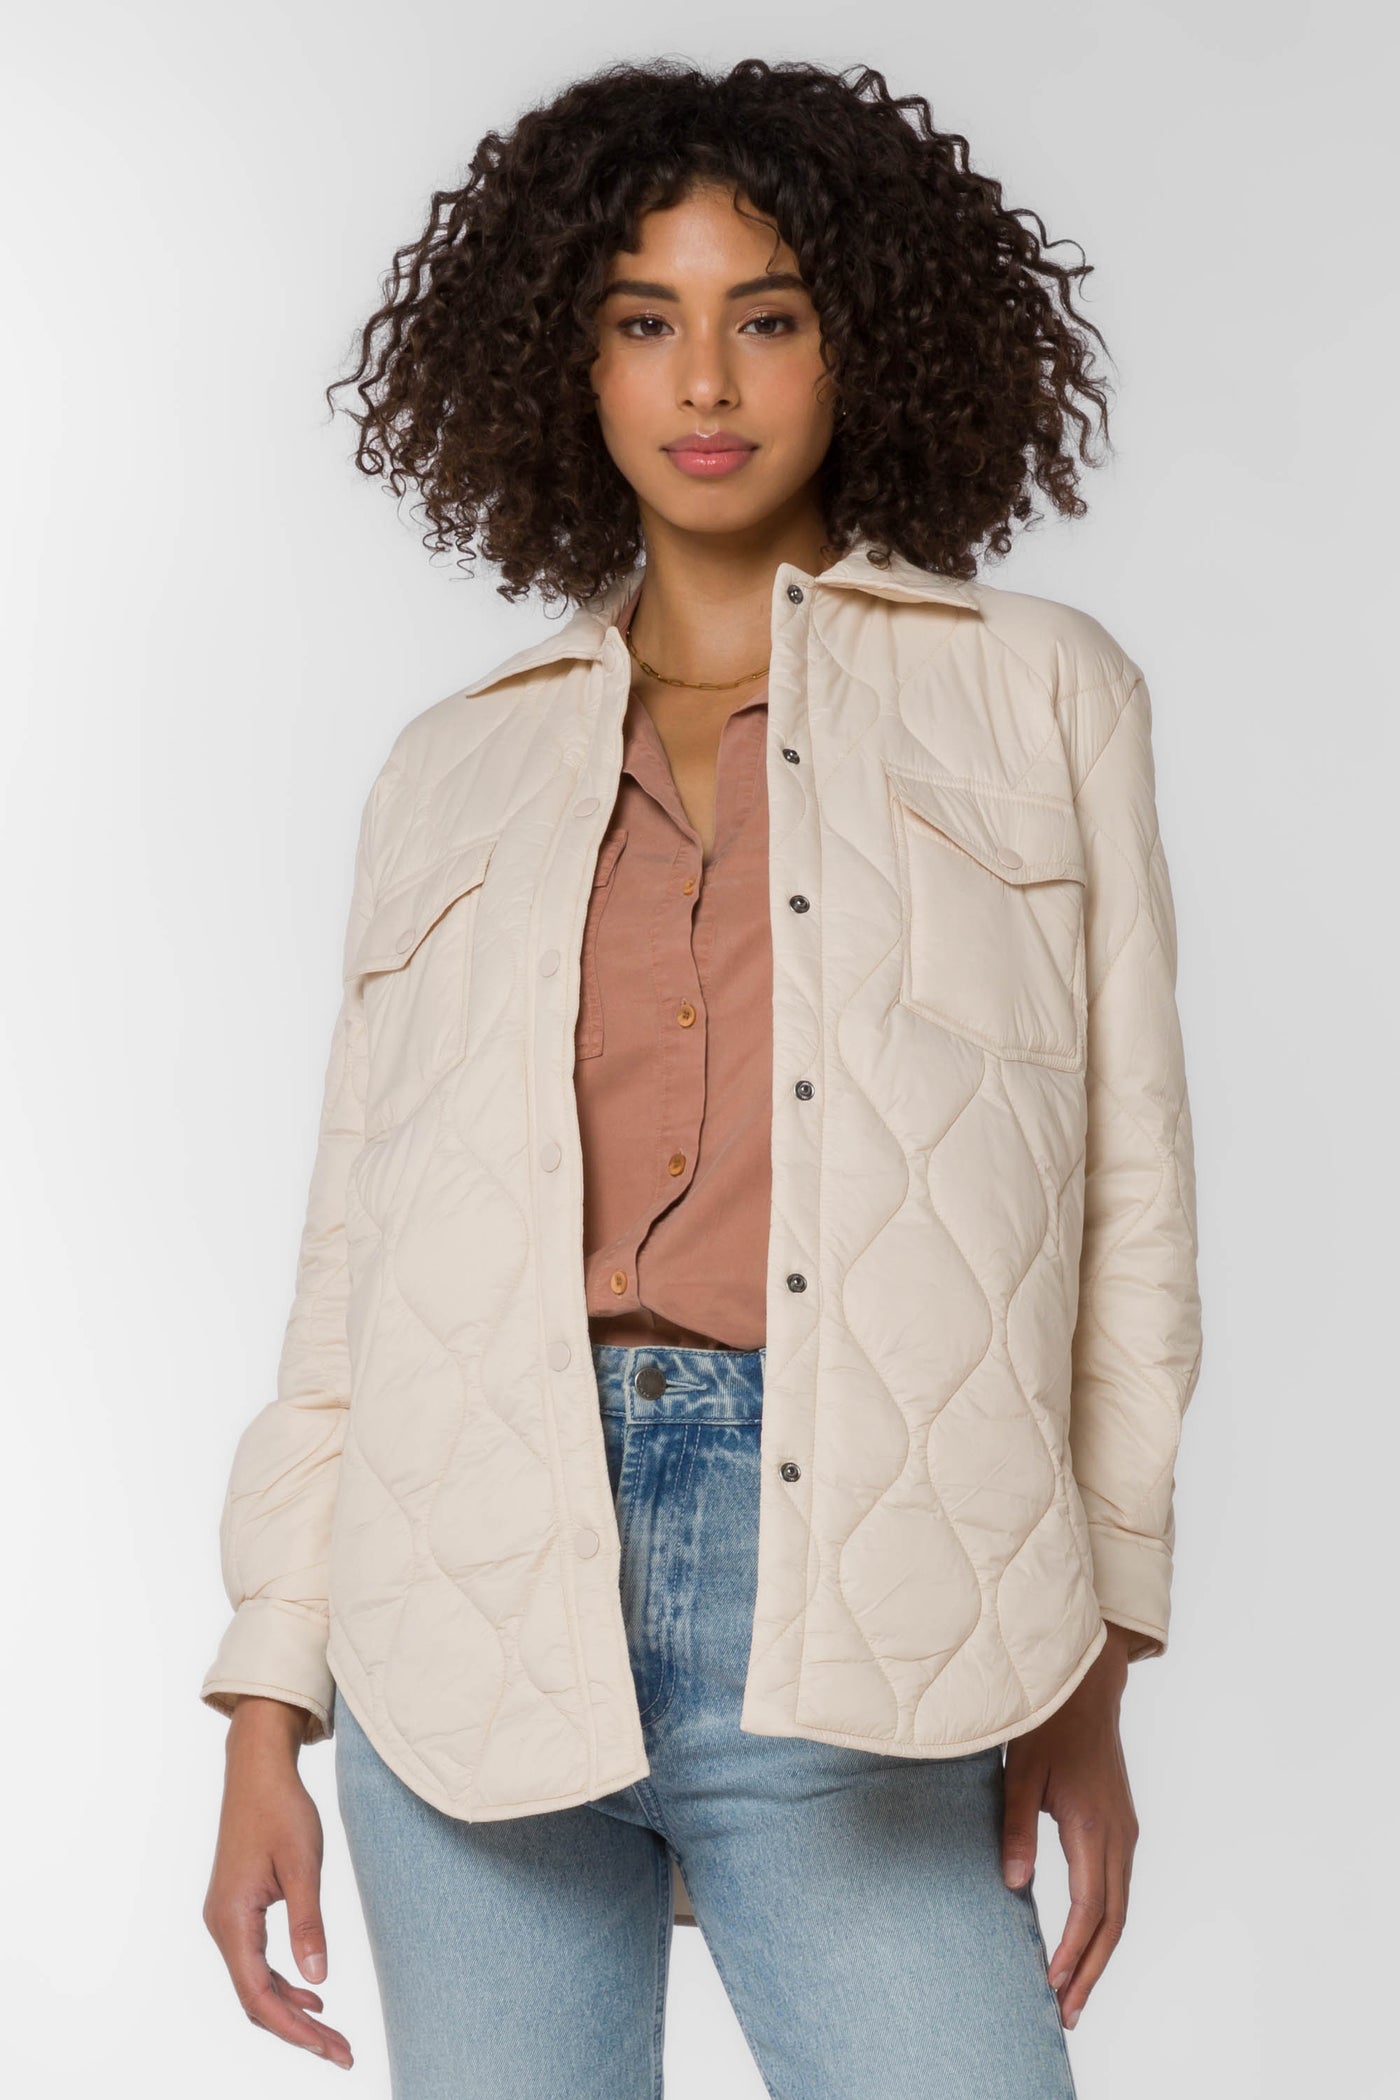 Eleanor Cream Jacket - Jackets & Outerwear - Velvet Heart Clothing